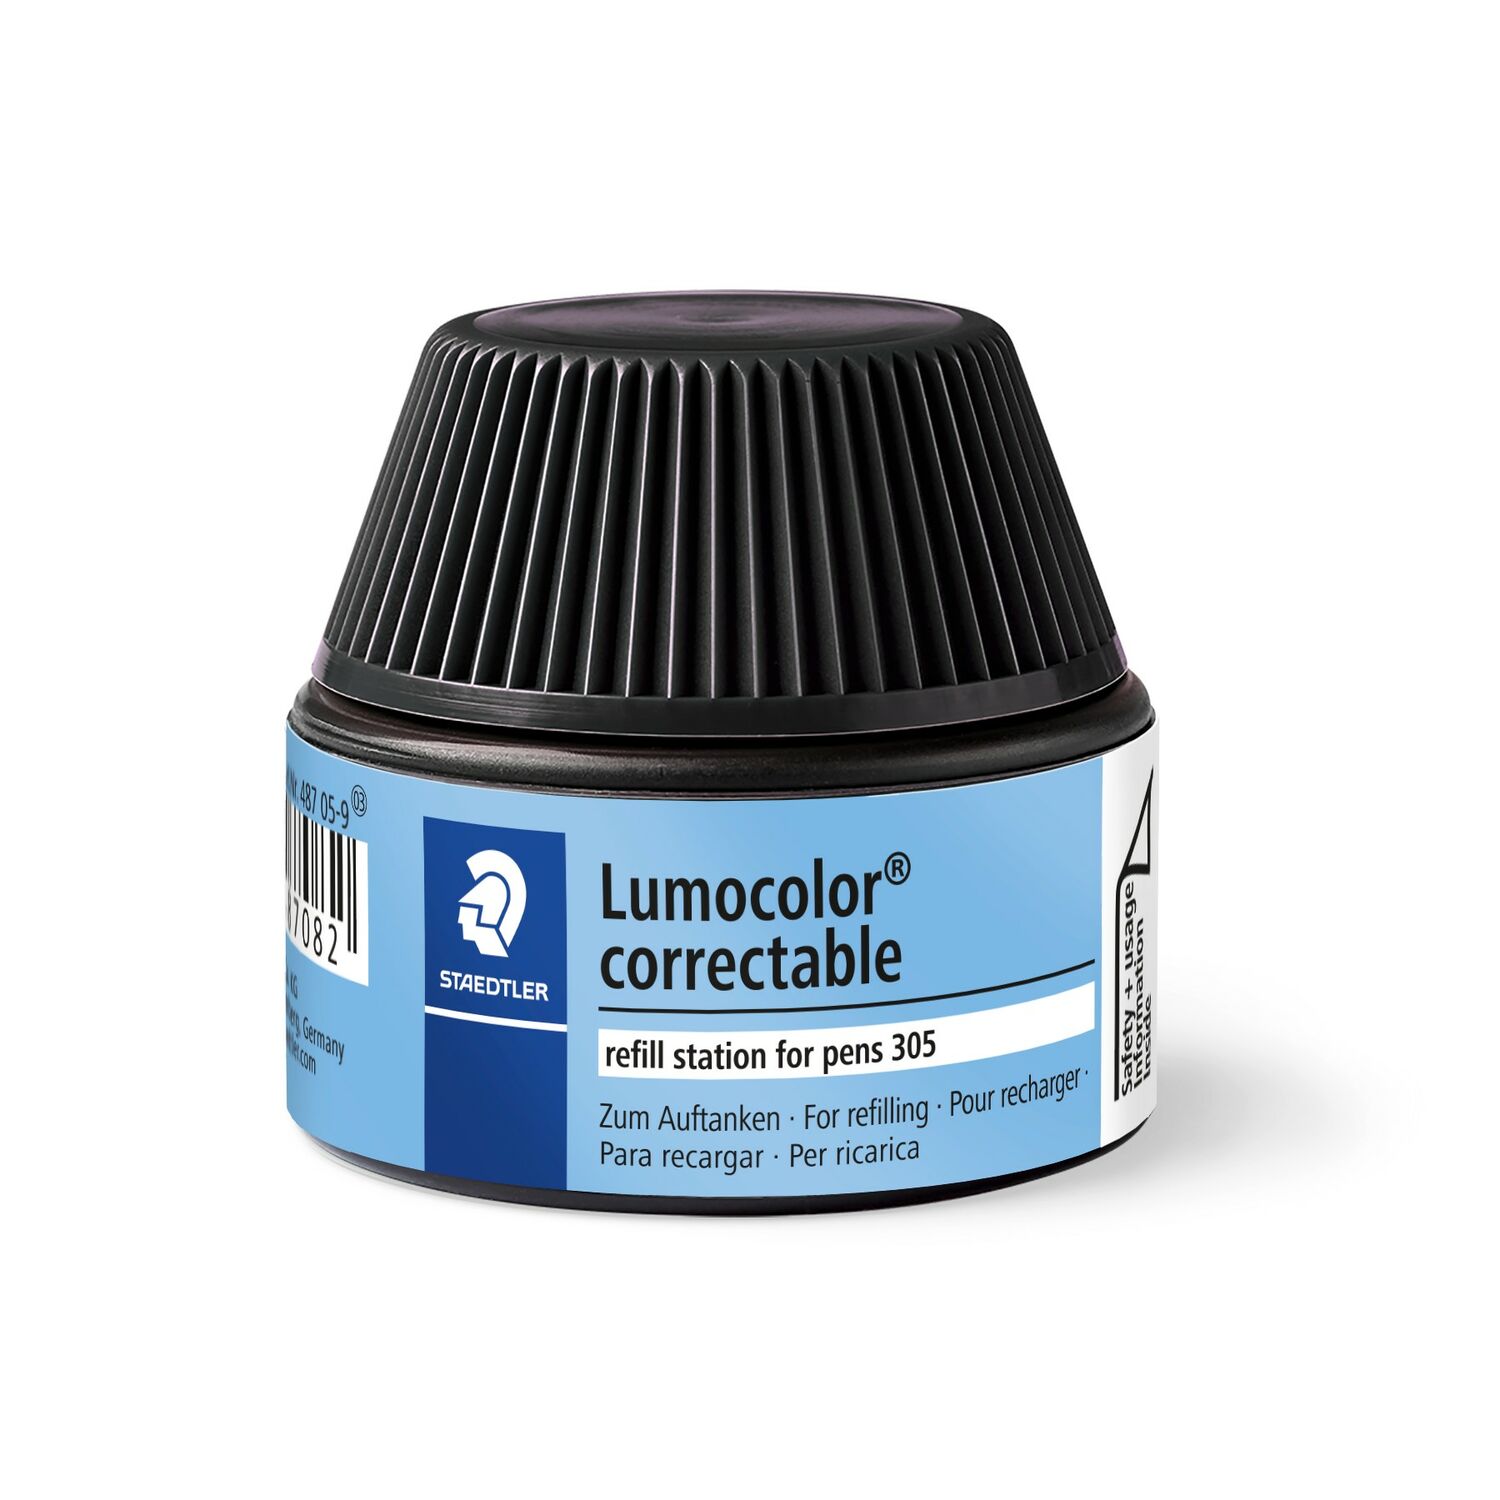 Lumocolor® correctable refill station 487 05 - Refill station for Lumocolor correctable 305